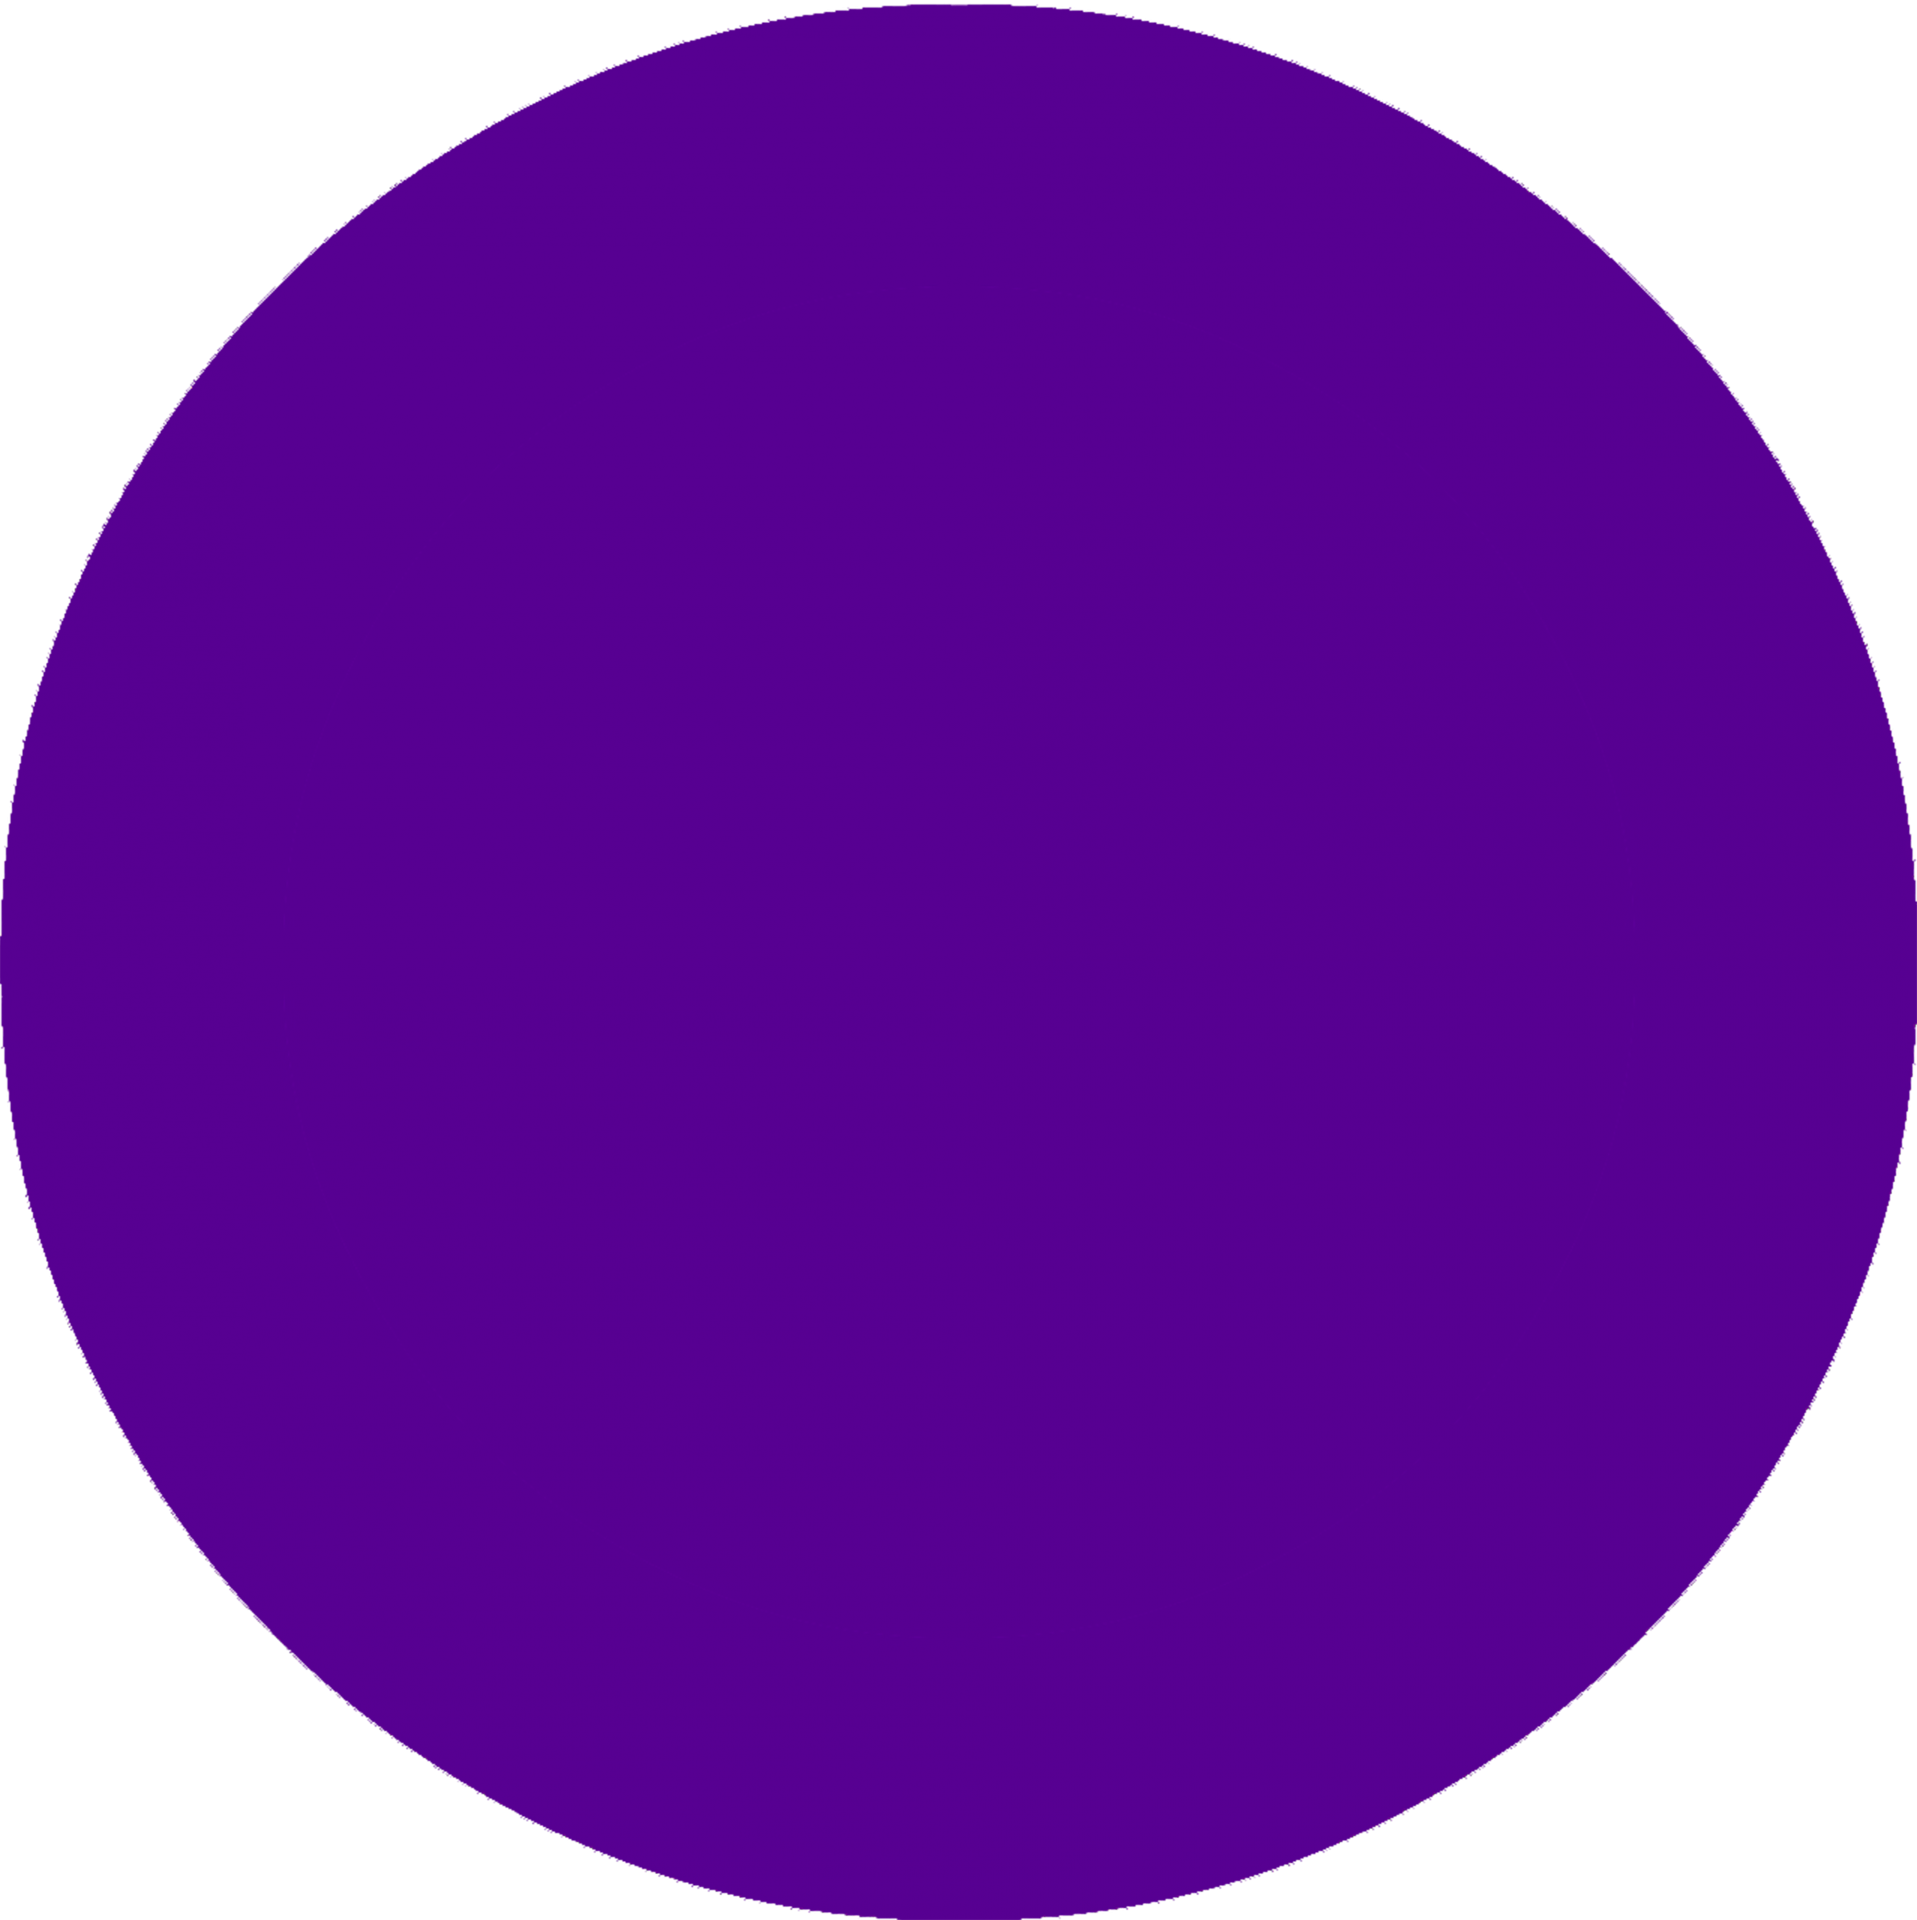 Cercul violet